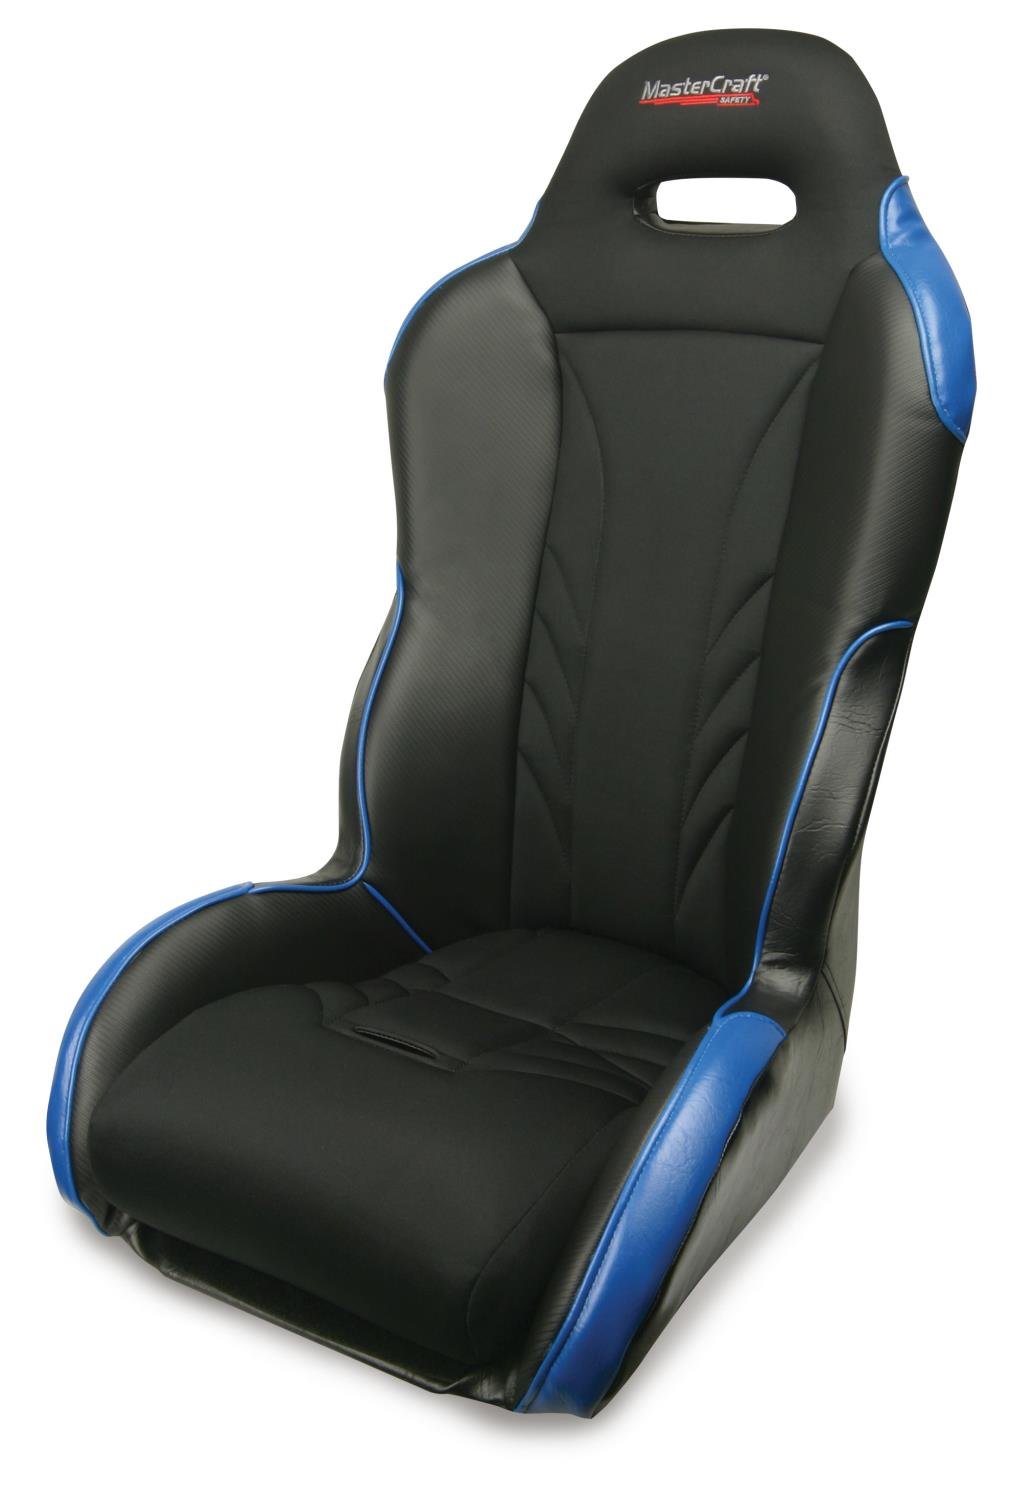 573407 S2/4 w/Fixed Headrest, Black Vinyl Outer w/Black Cloth Center & Black Side Panels, Blue Trim, Universal